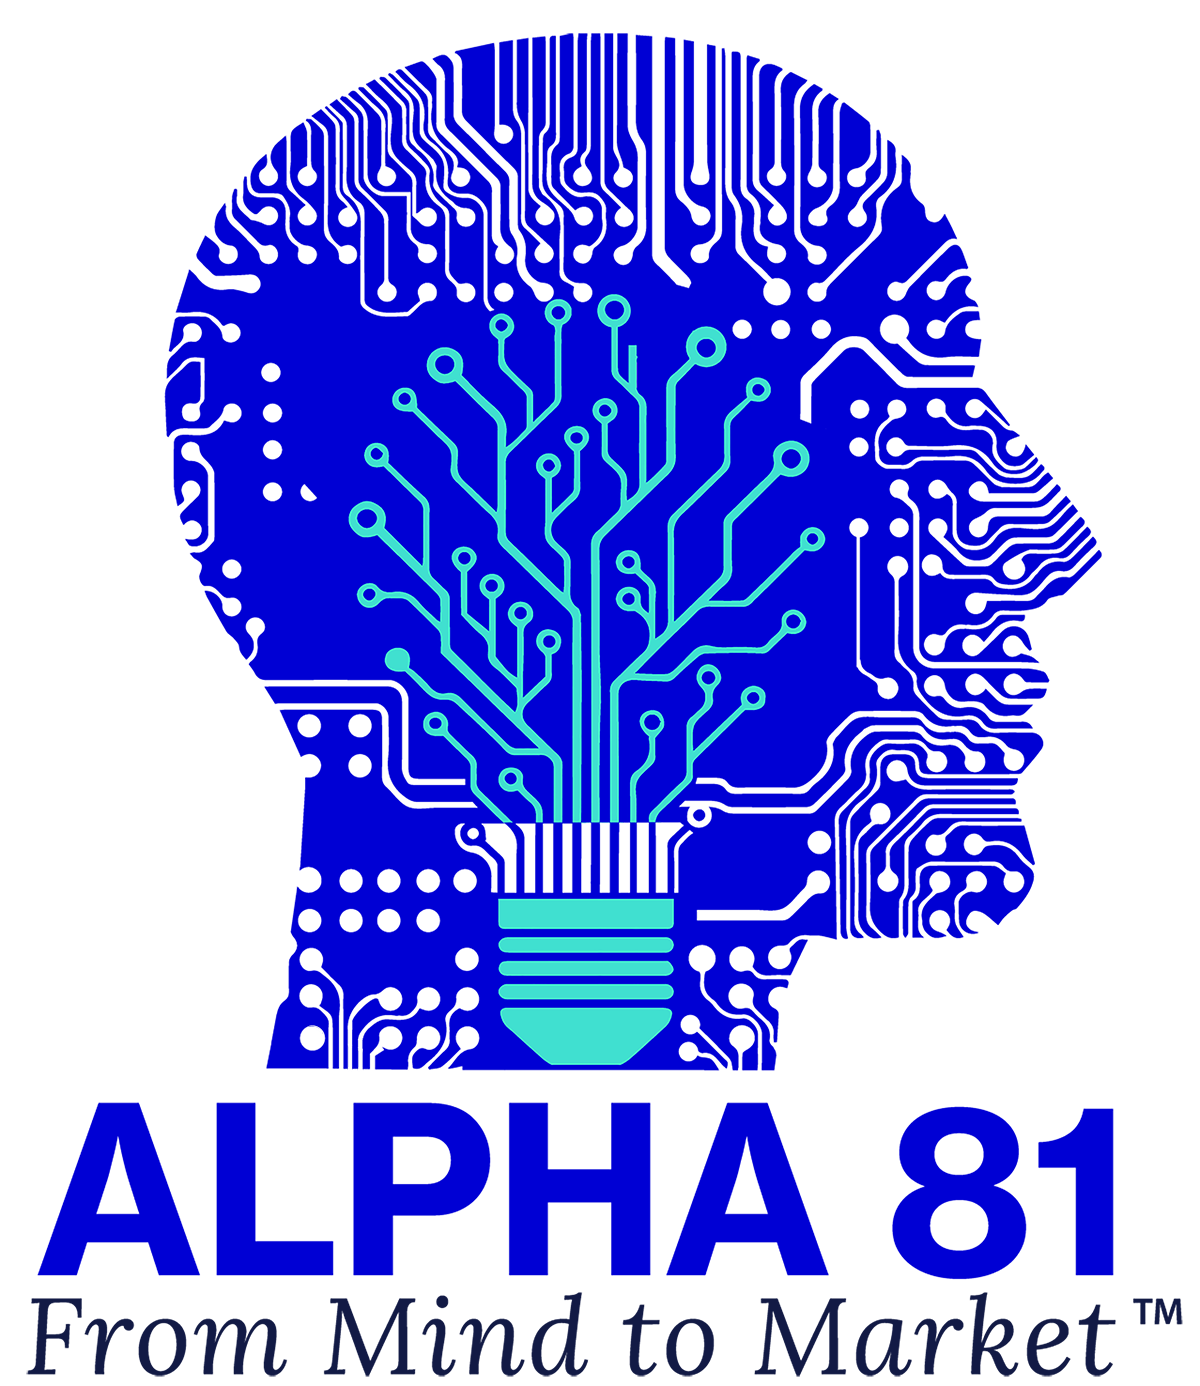 Alpha81